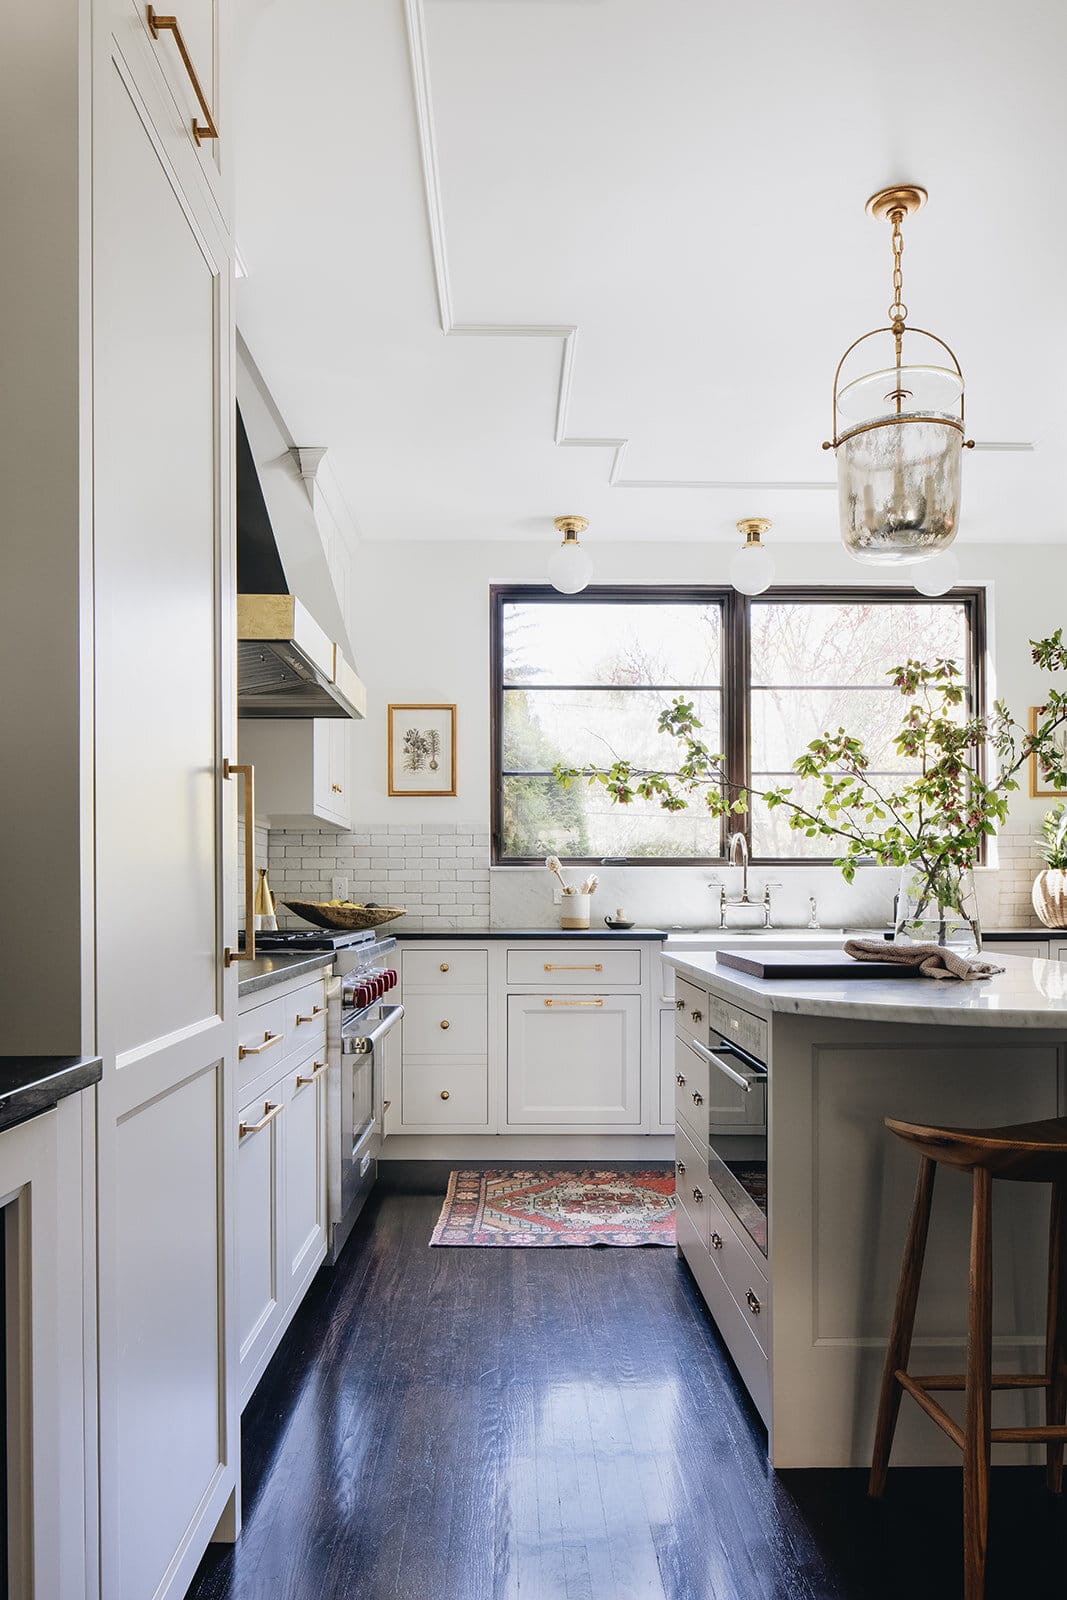 Jean Stoffer Design - Stoffer Photography Interiors - kitchen - kitchen design - kitchens - kitchen decor - kitchen inspiration